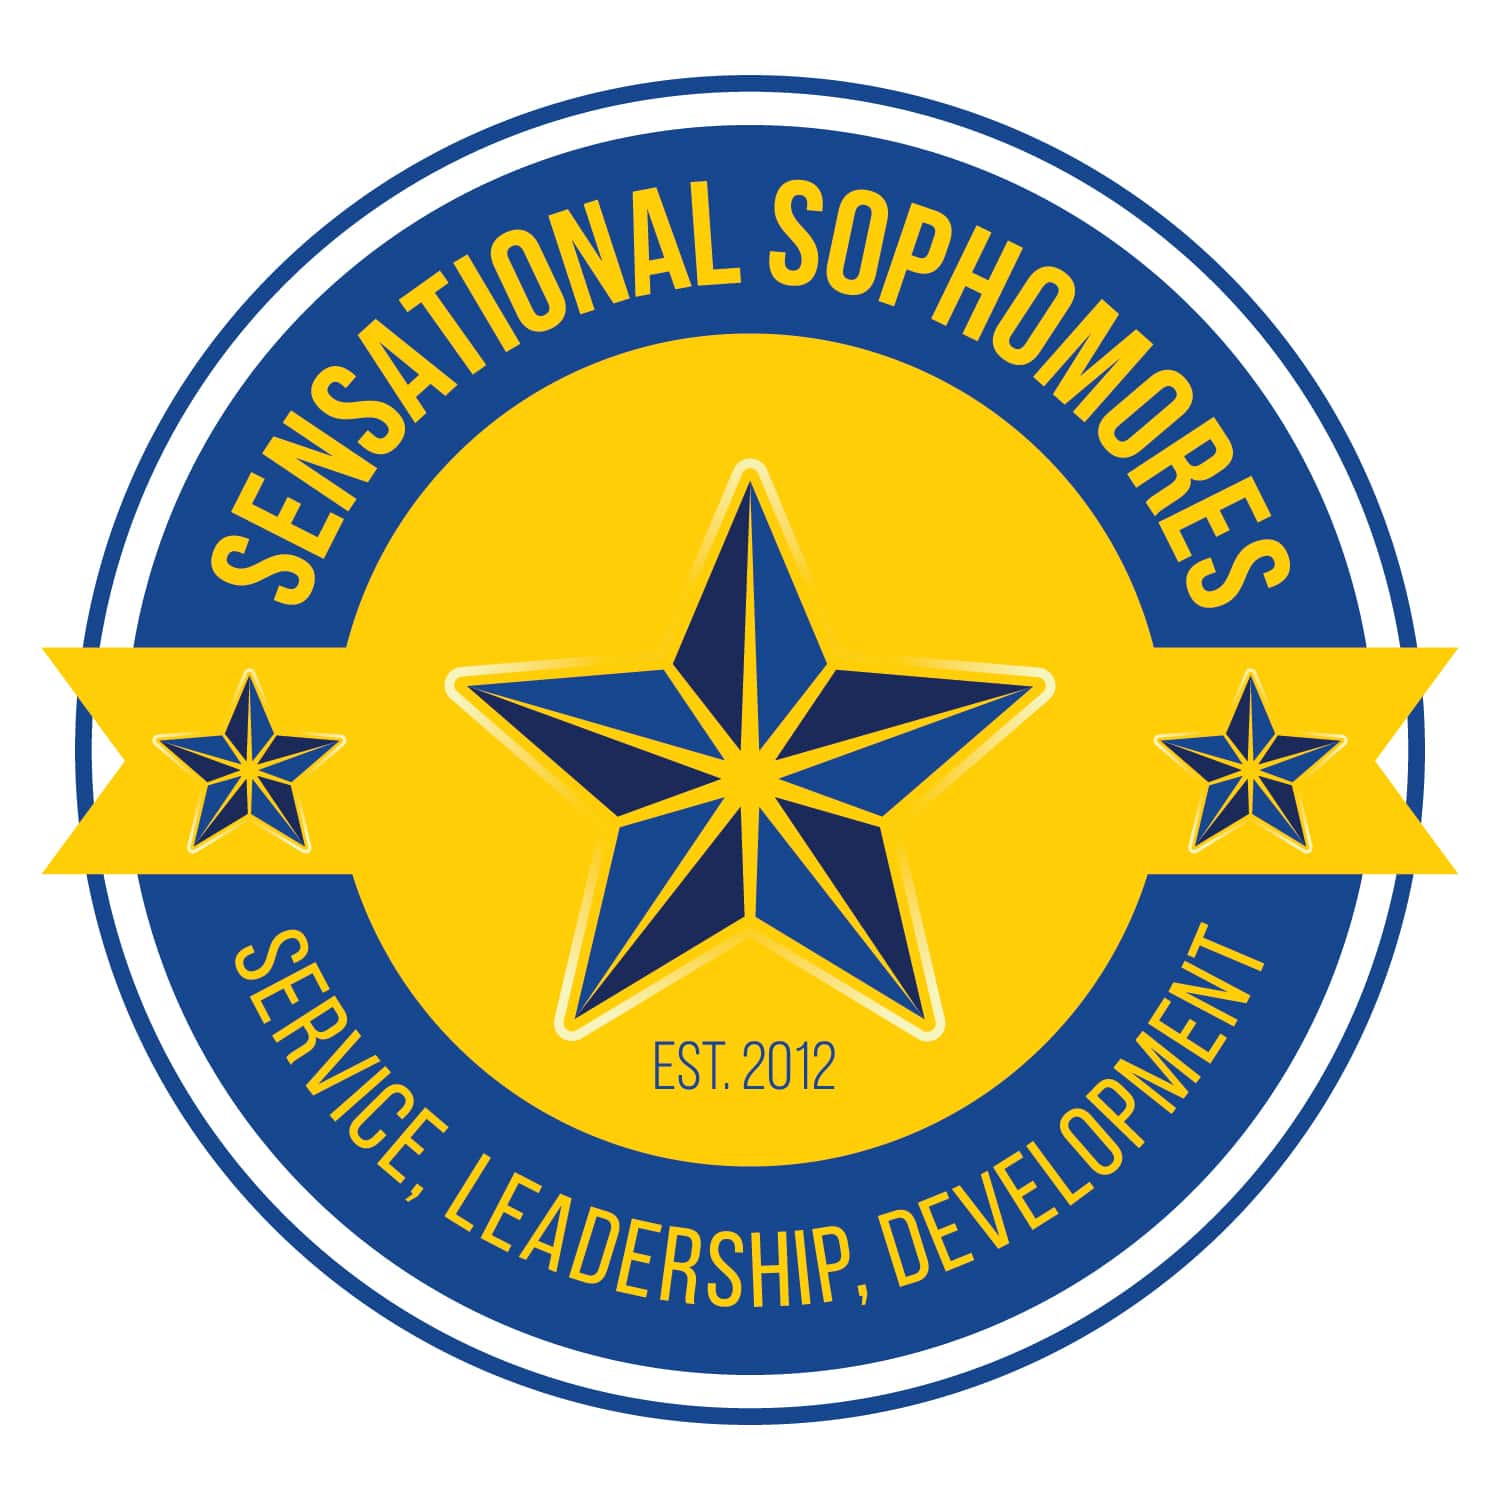 Sensational Sophomore Logo